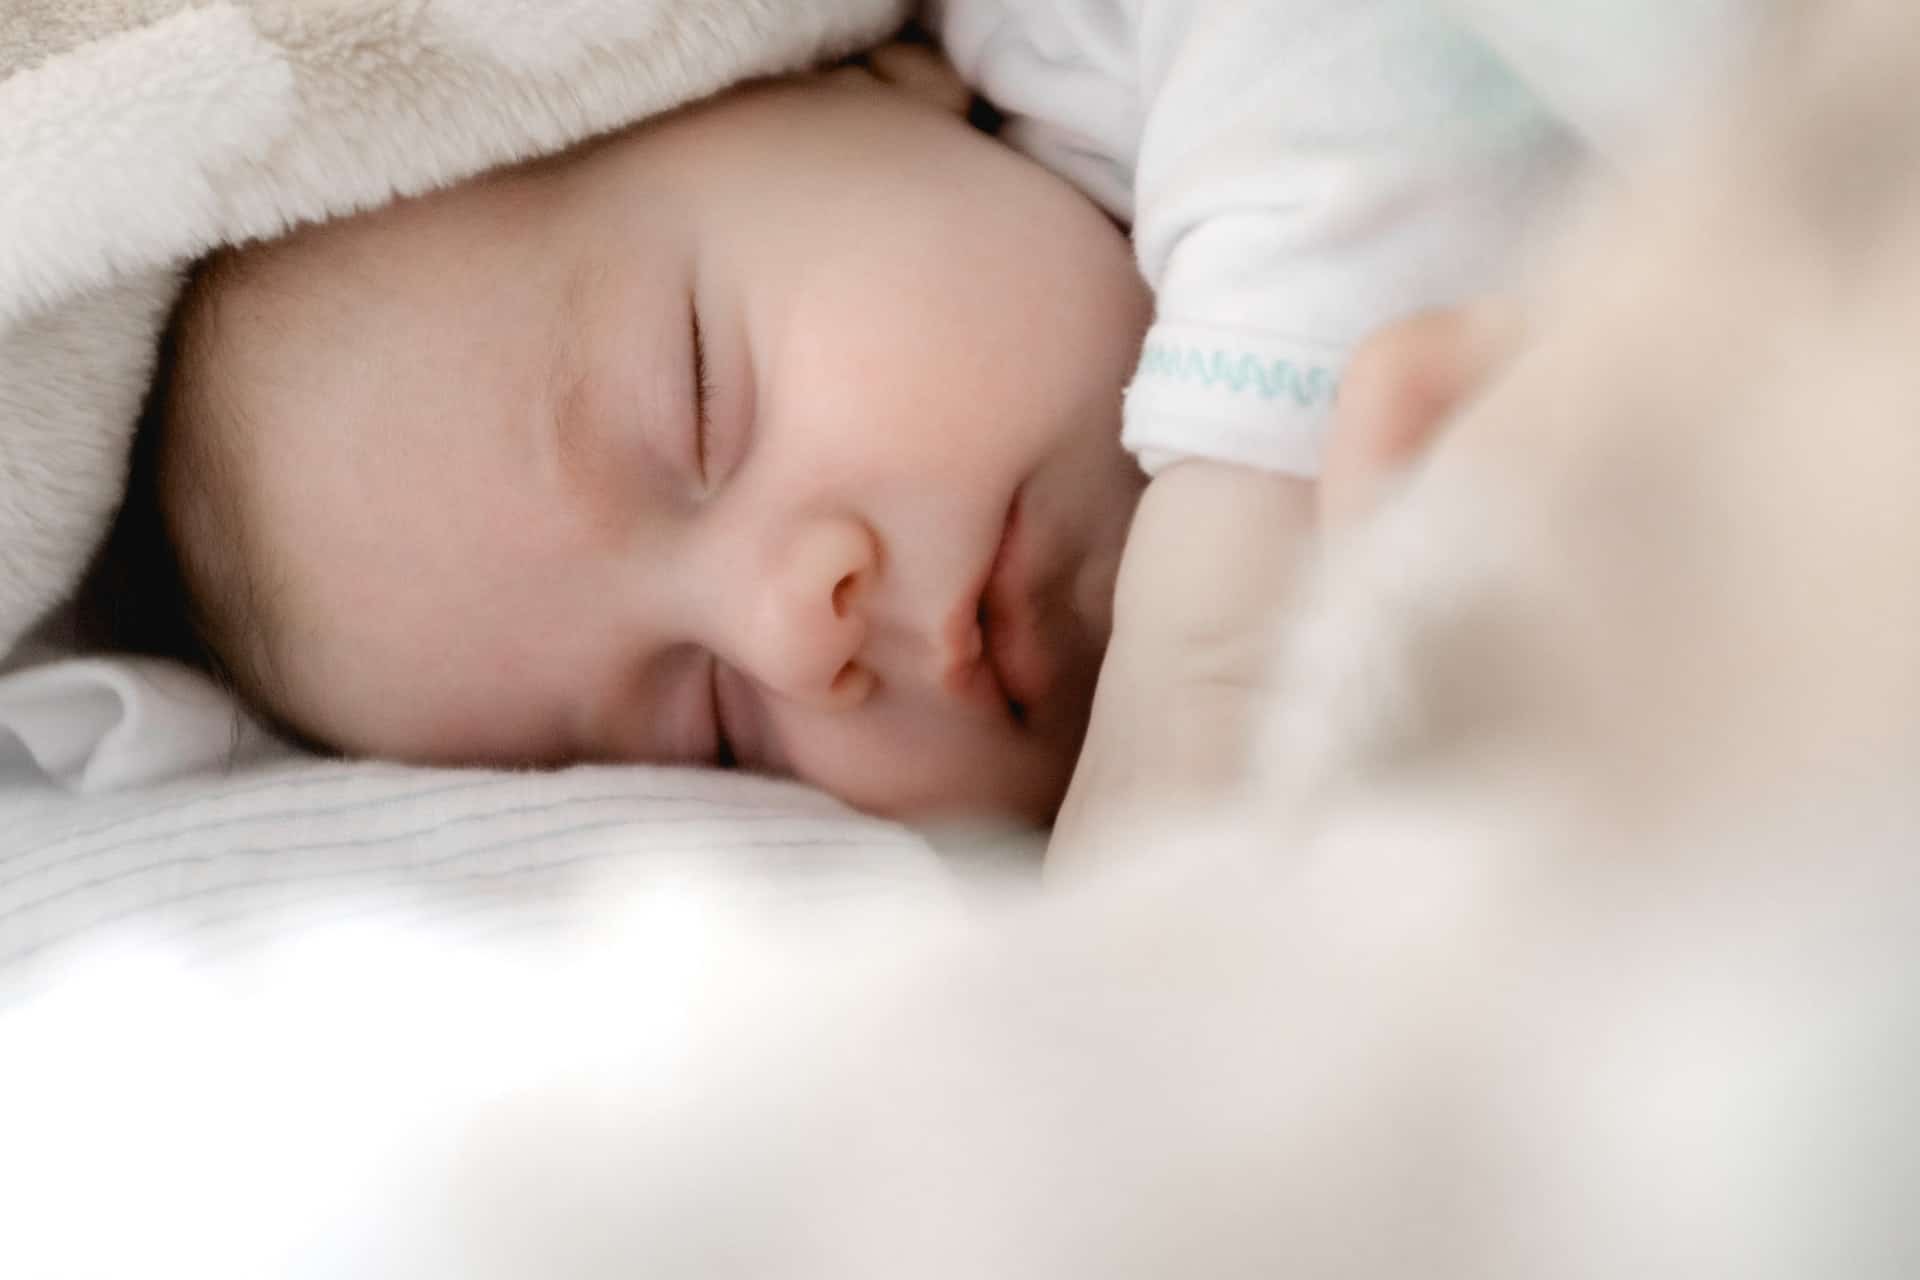 peter oslanec Mu6RjGUzrQA unsplash - How to Keep Baby Warm at Night and Minimize SIDS Risk?